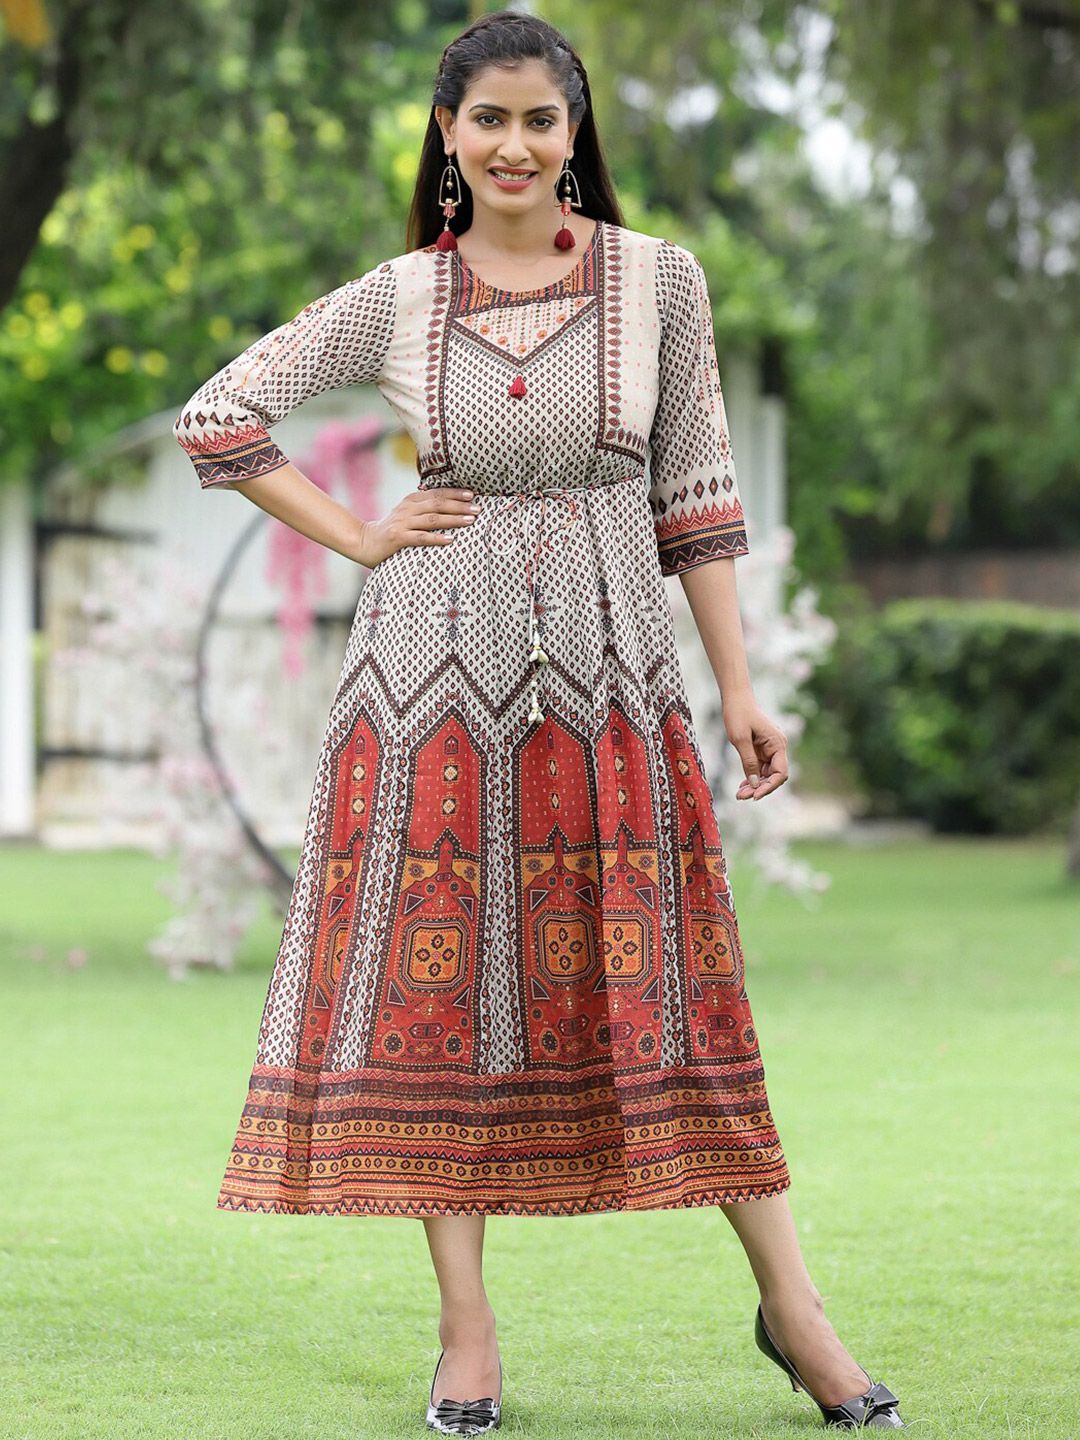 Juniper White Ethnic Motifs Georgette Ethnic A-Line Midi Dress Price in India